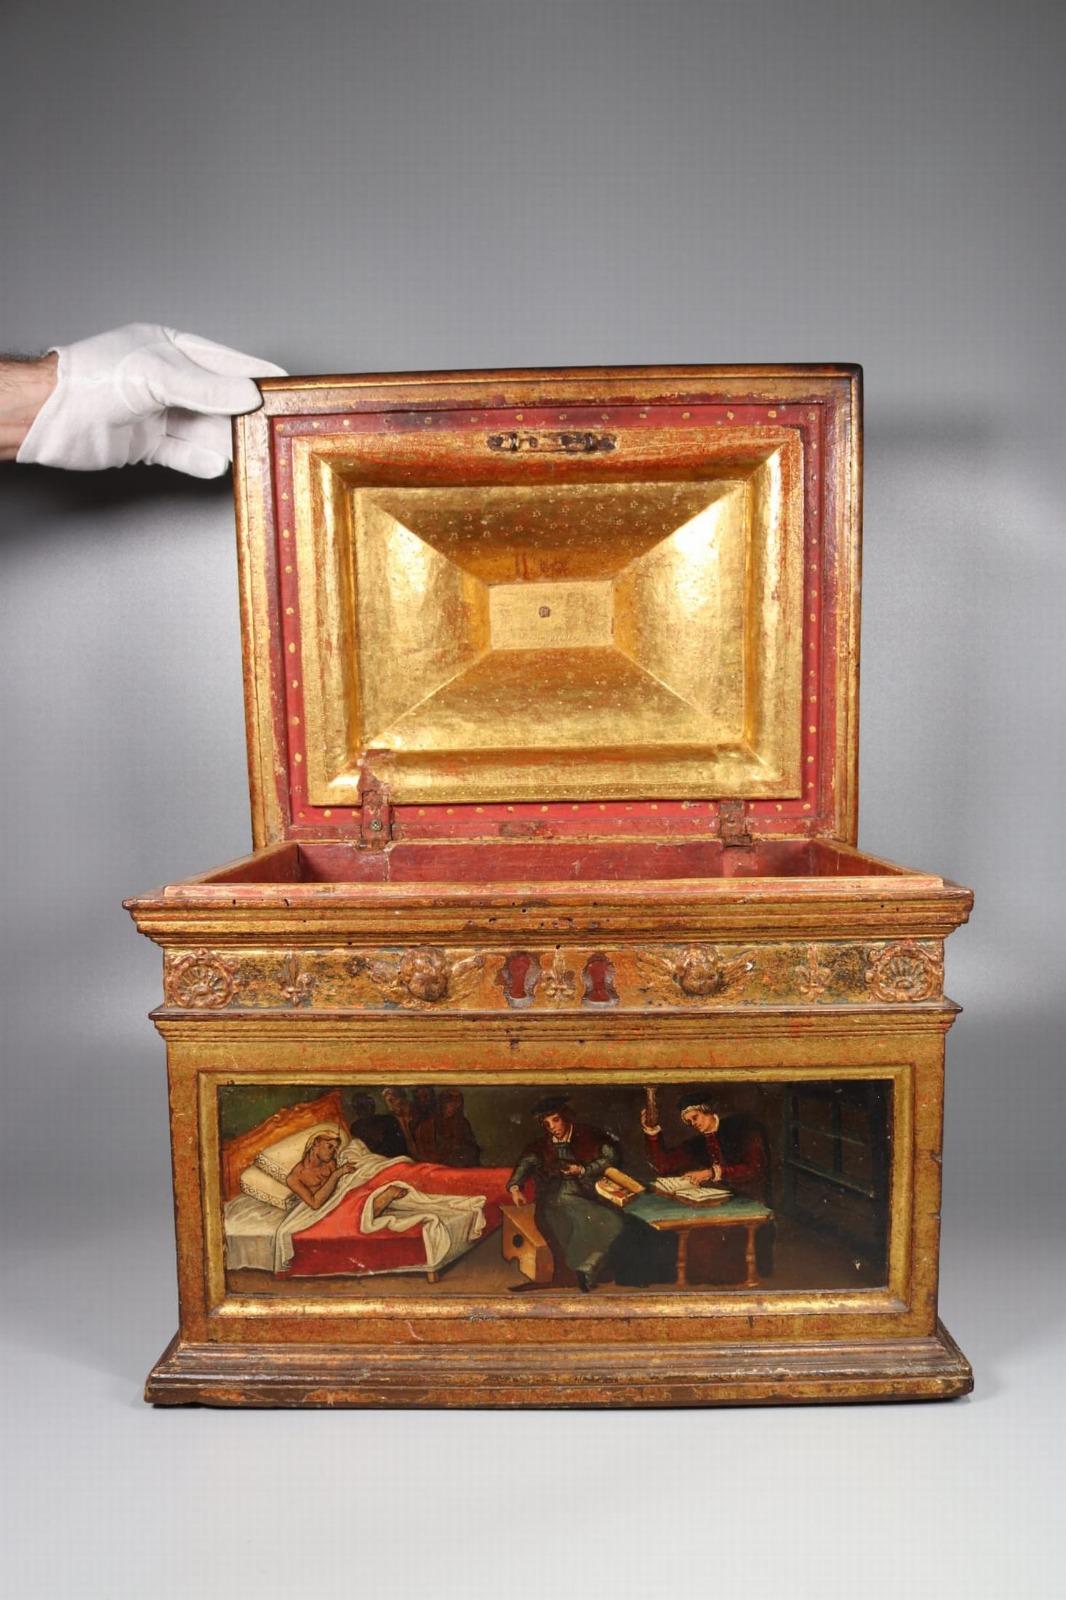 Baroque Important Renaissance Medical Box Spanish or Italian Workshop, Around 1550 For Sale